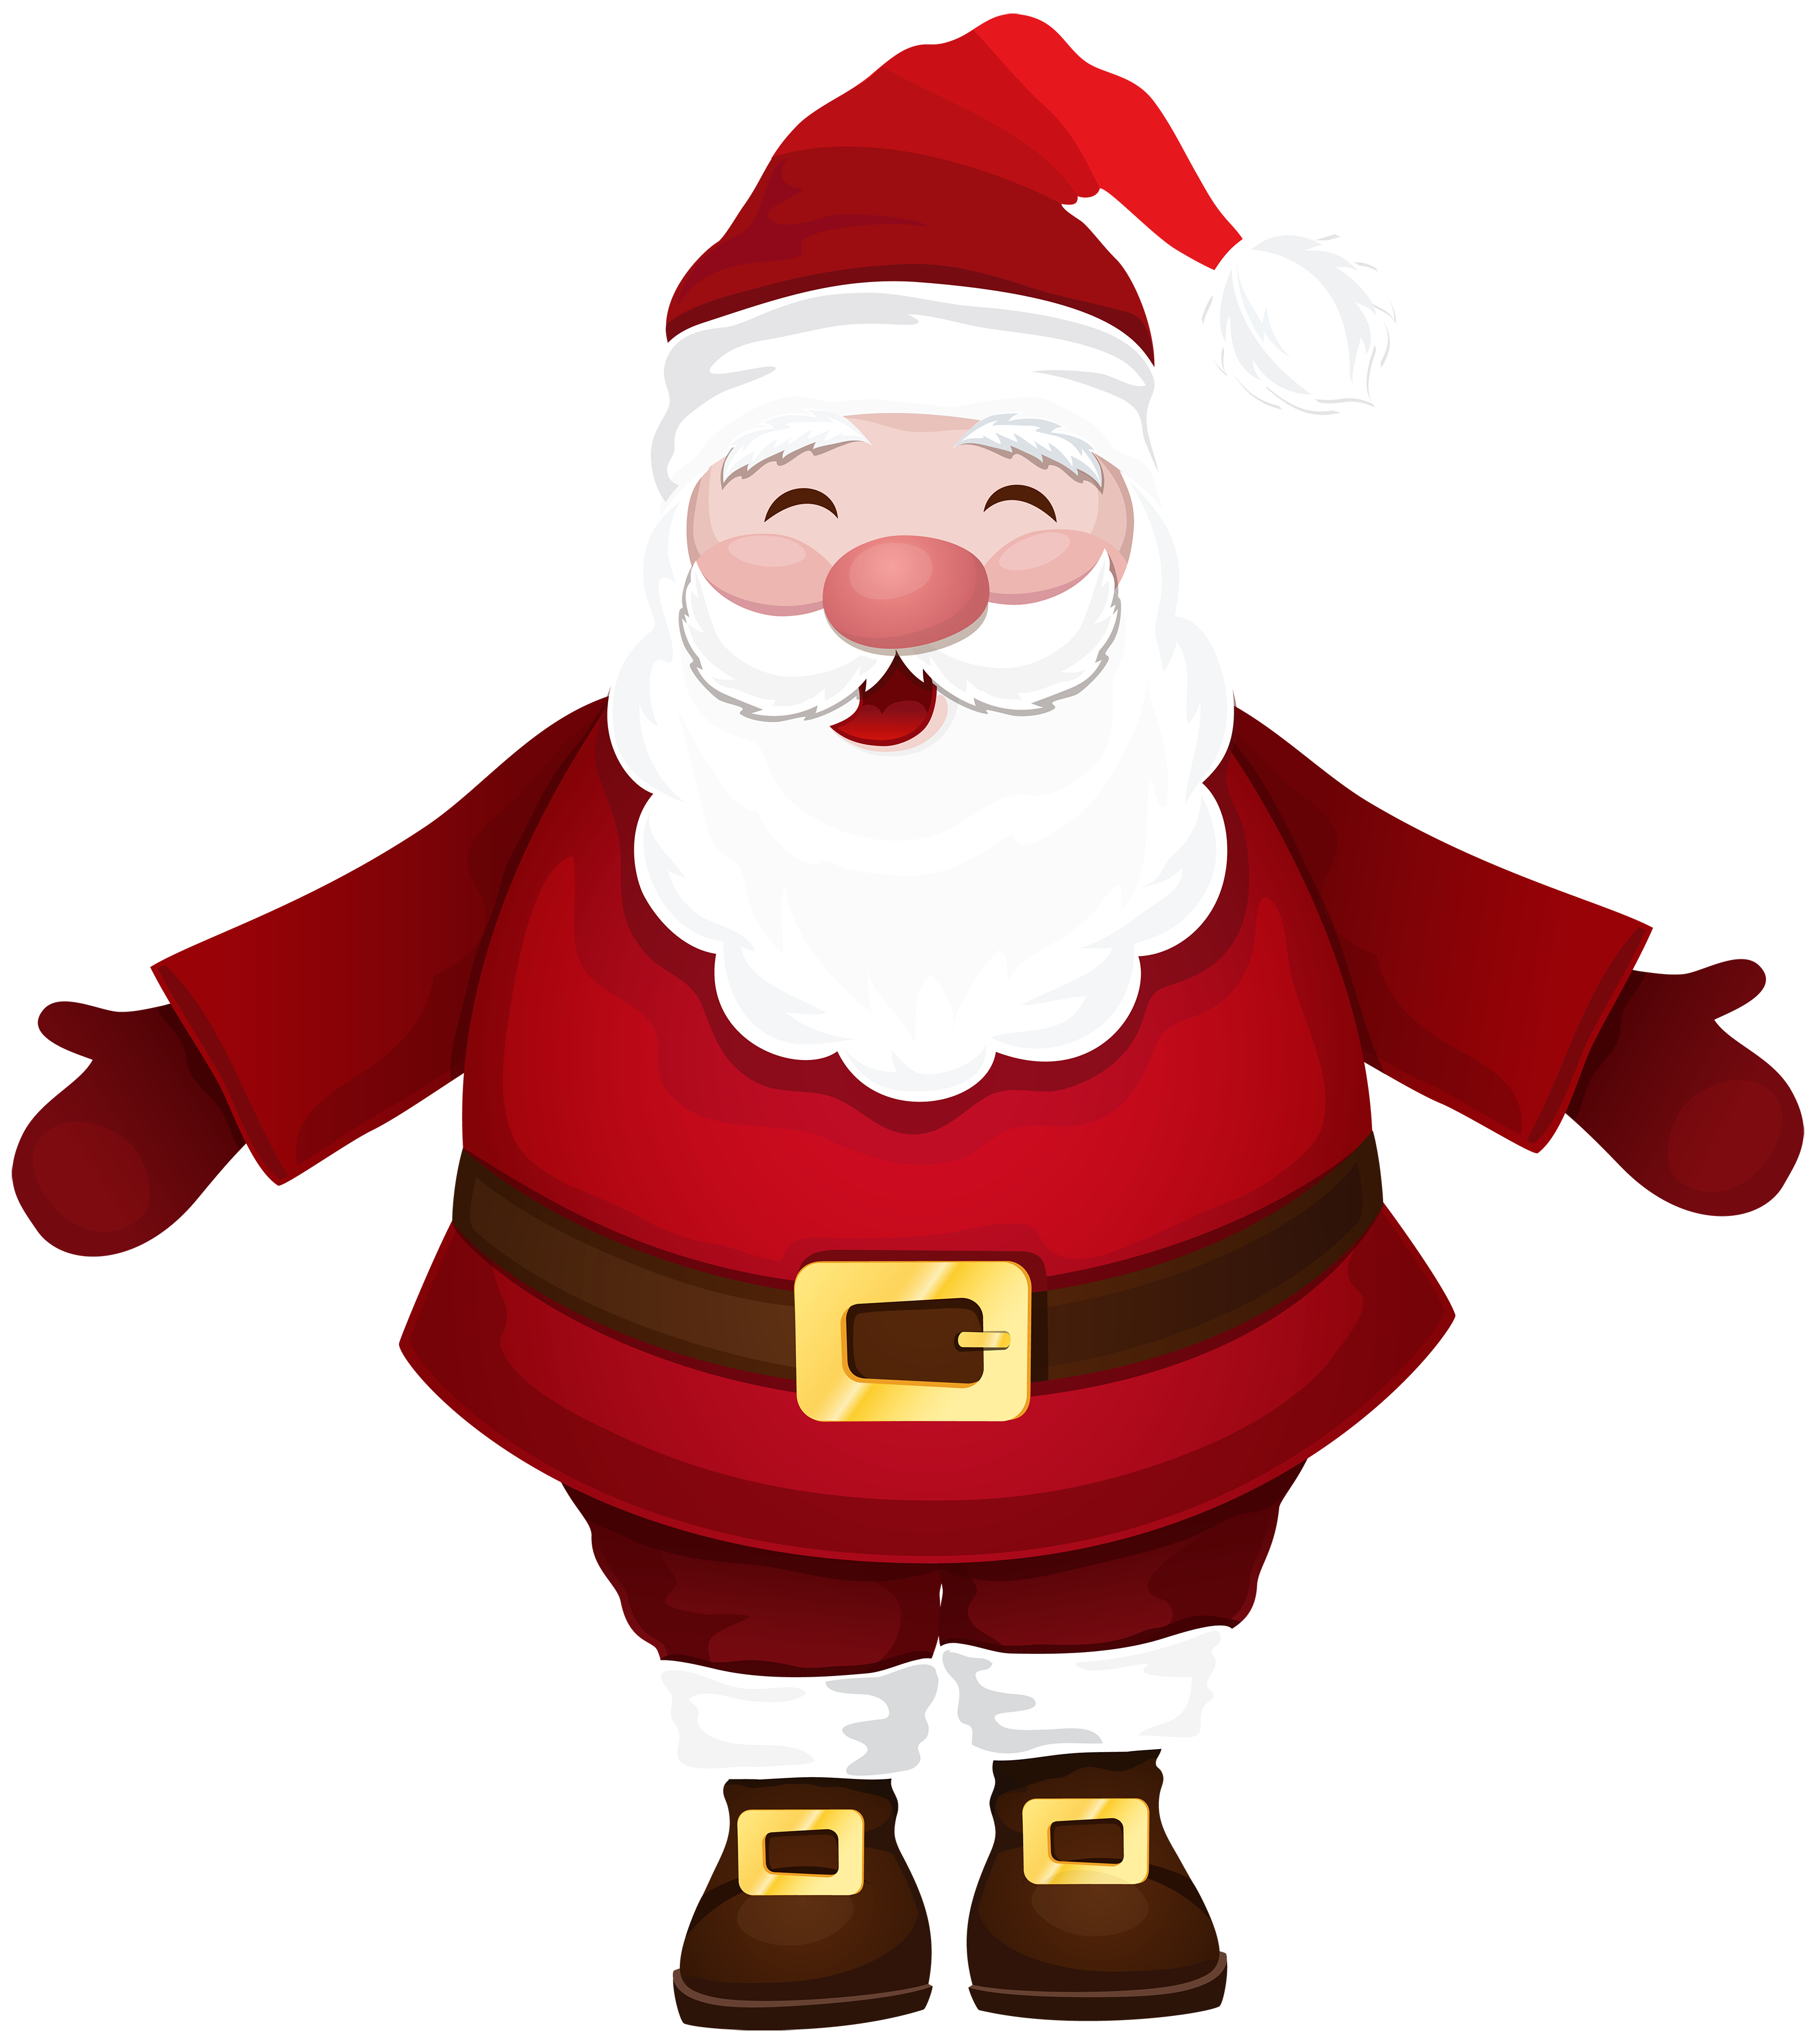 Santa Claus PNG image free Download 